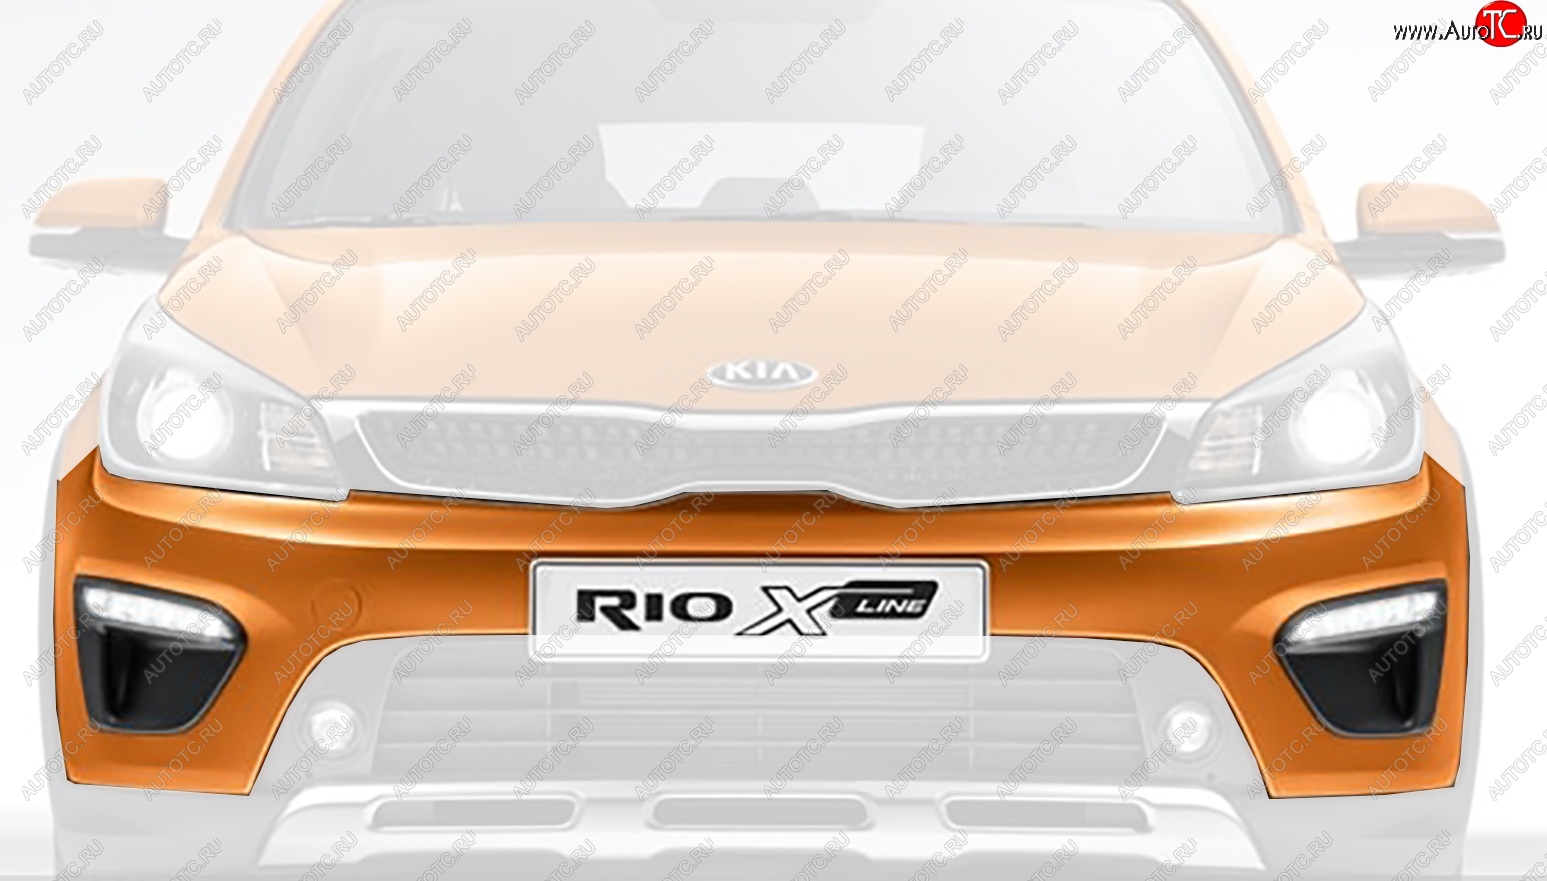 12 499 р. Бампер передний Оригинал (верхняя часть) KIA Rio X-line (2017-2021) (Неокрашенный)  с доставкой в г. Калуга